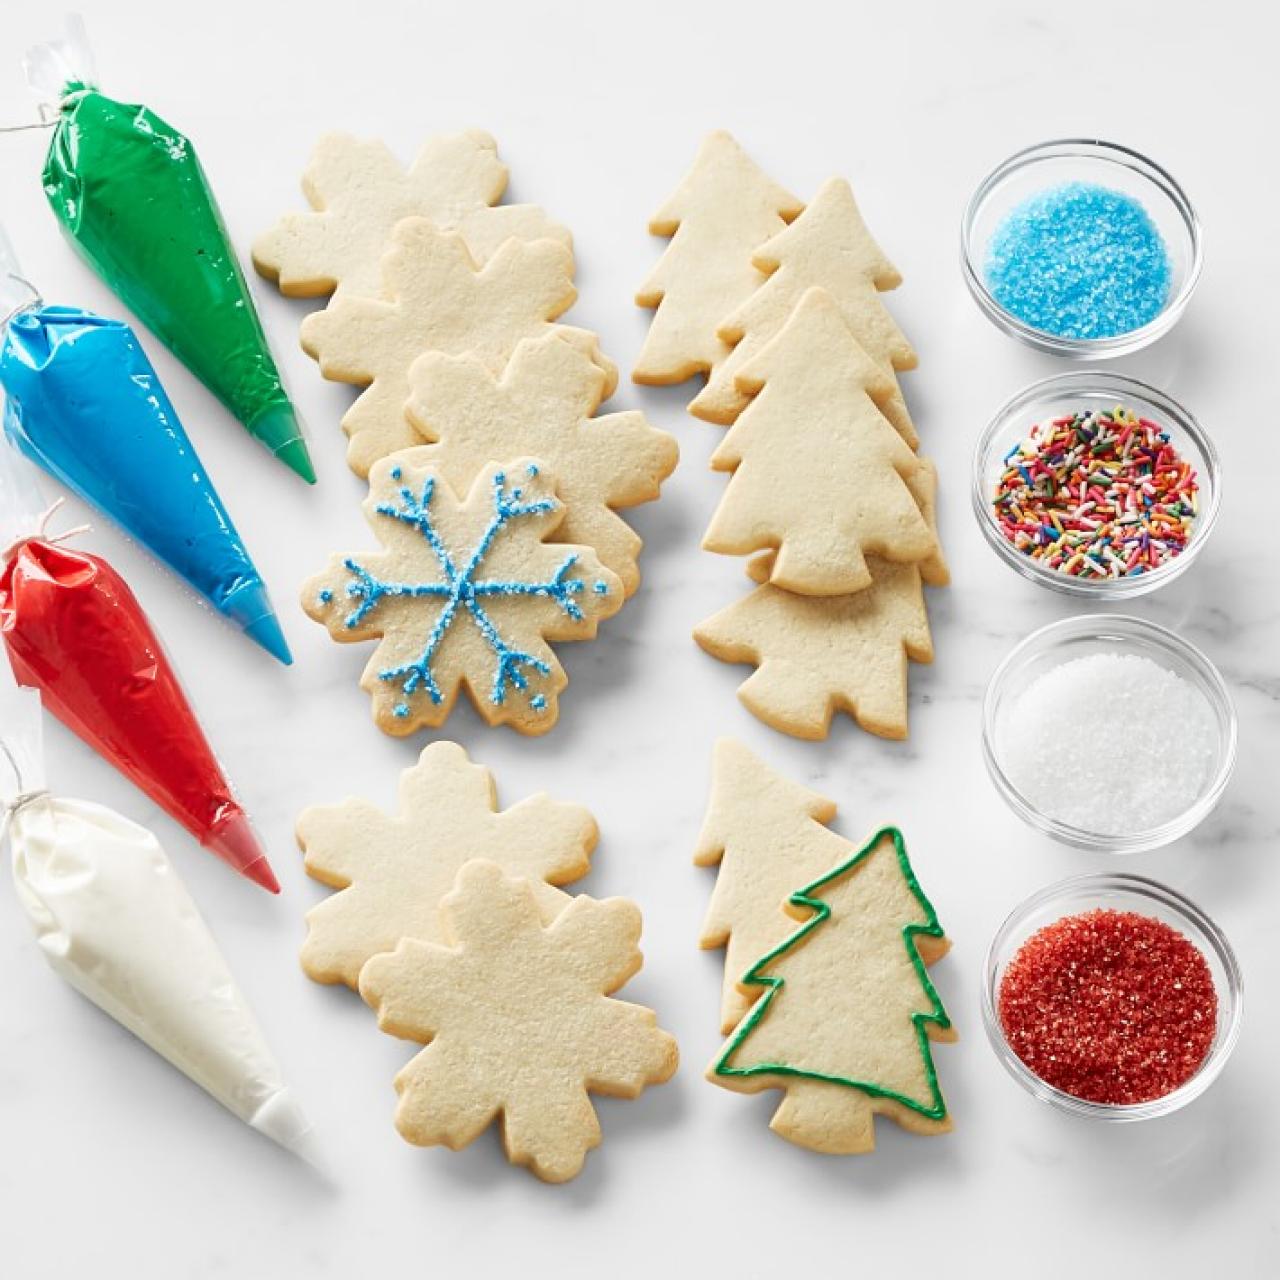 https://tlc.sndimg.com/content/dam/images/tlc/tlcme/fullset/2021/december/RX_Holiday-baking-kits-for-kids-williams-sonomacookie-kit-.jpg.rend.hgtvcom.1280.1280.suffix/1638557944267.jpeg